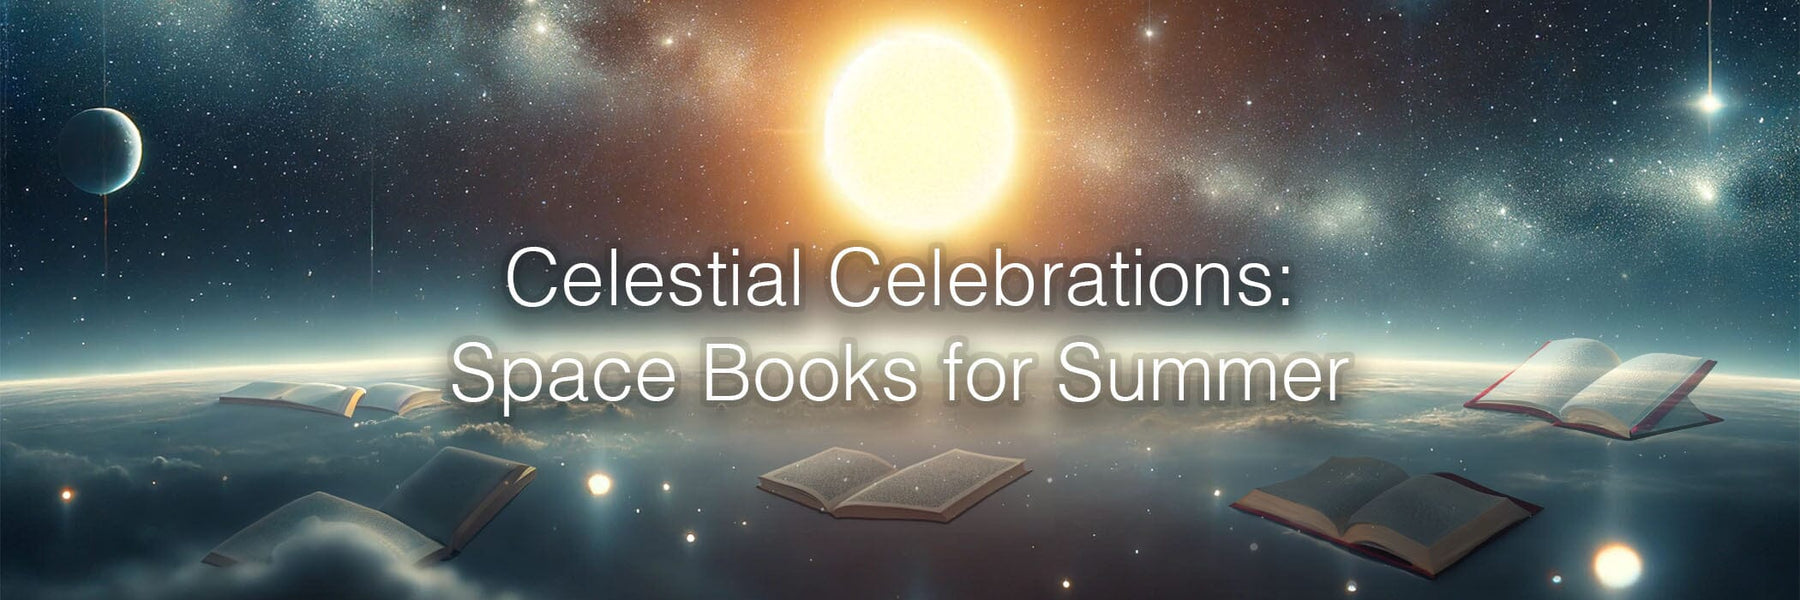 Celestial Celebrations: Space Books for Summer Solstice